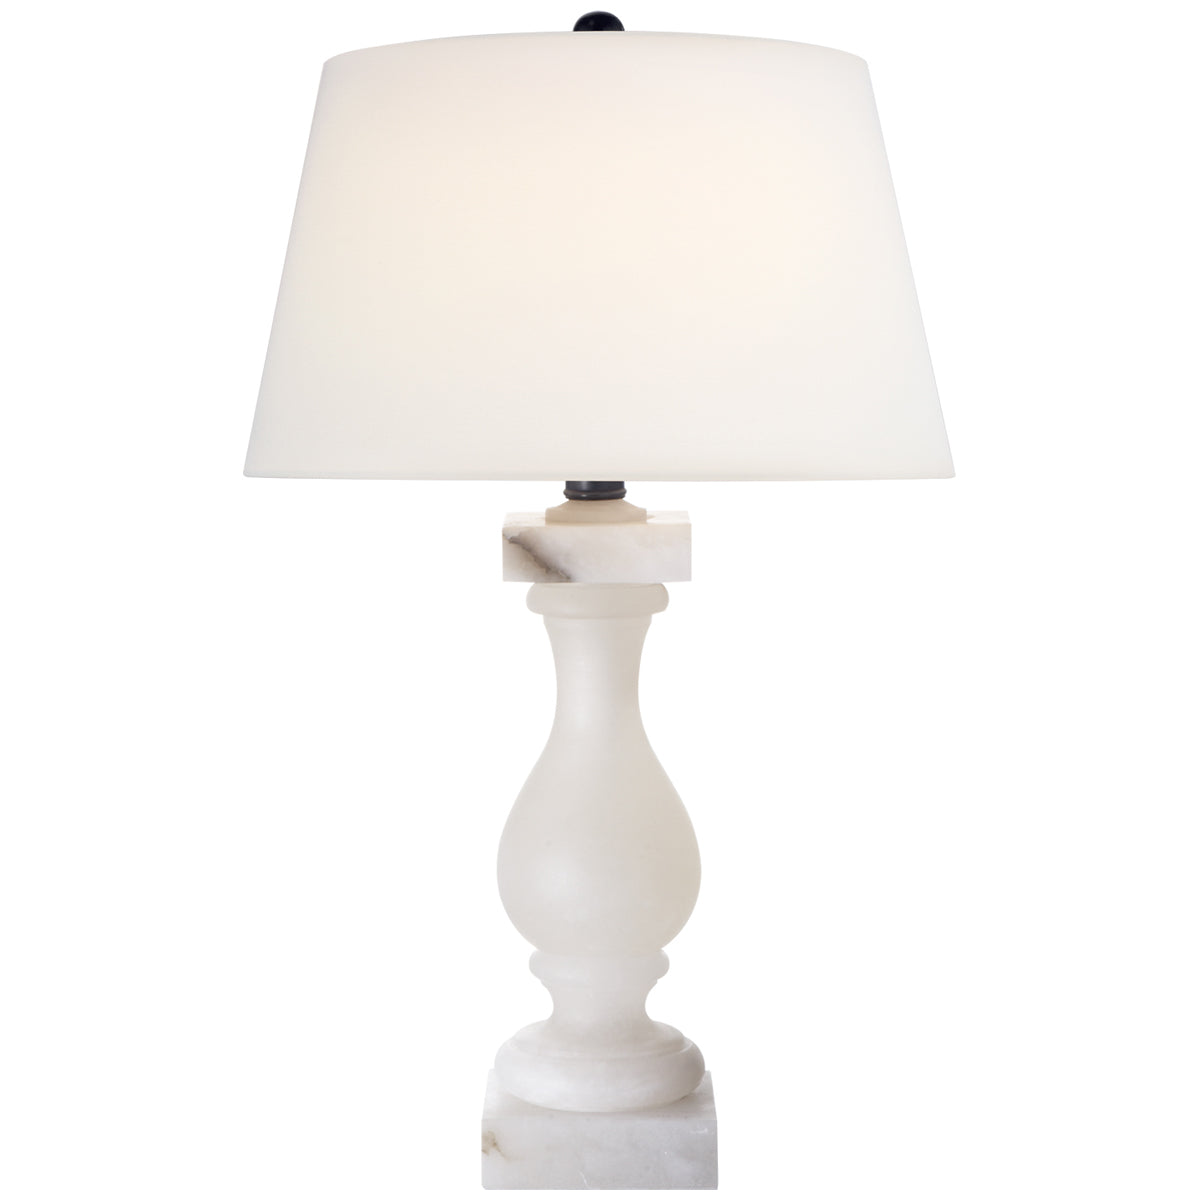 Visual Comfort Balustrade Table Lamp in Alabaster